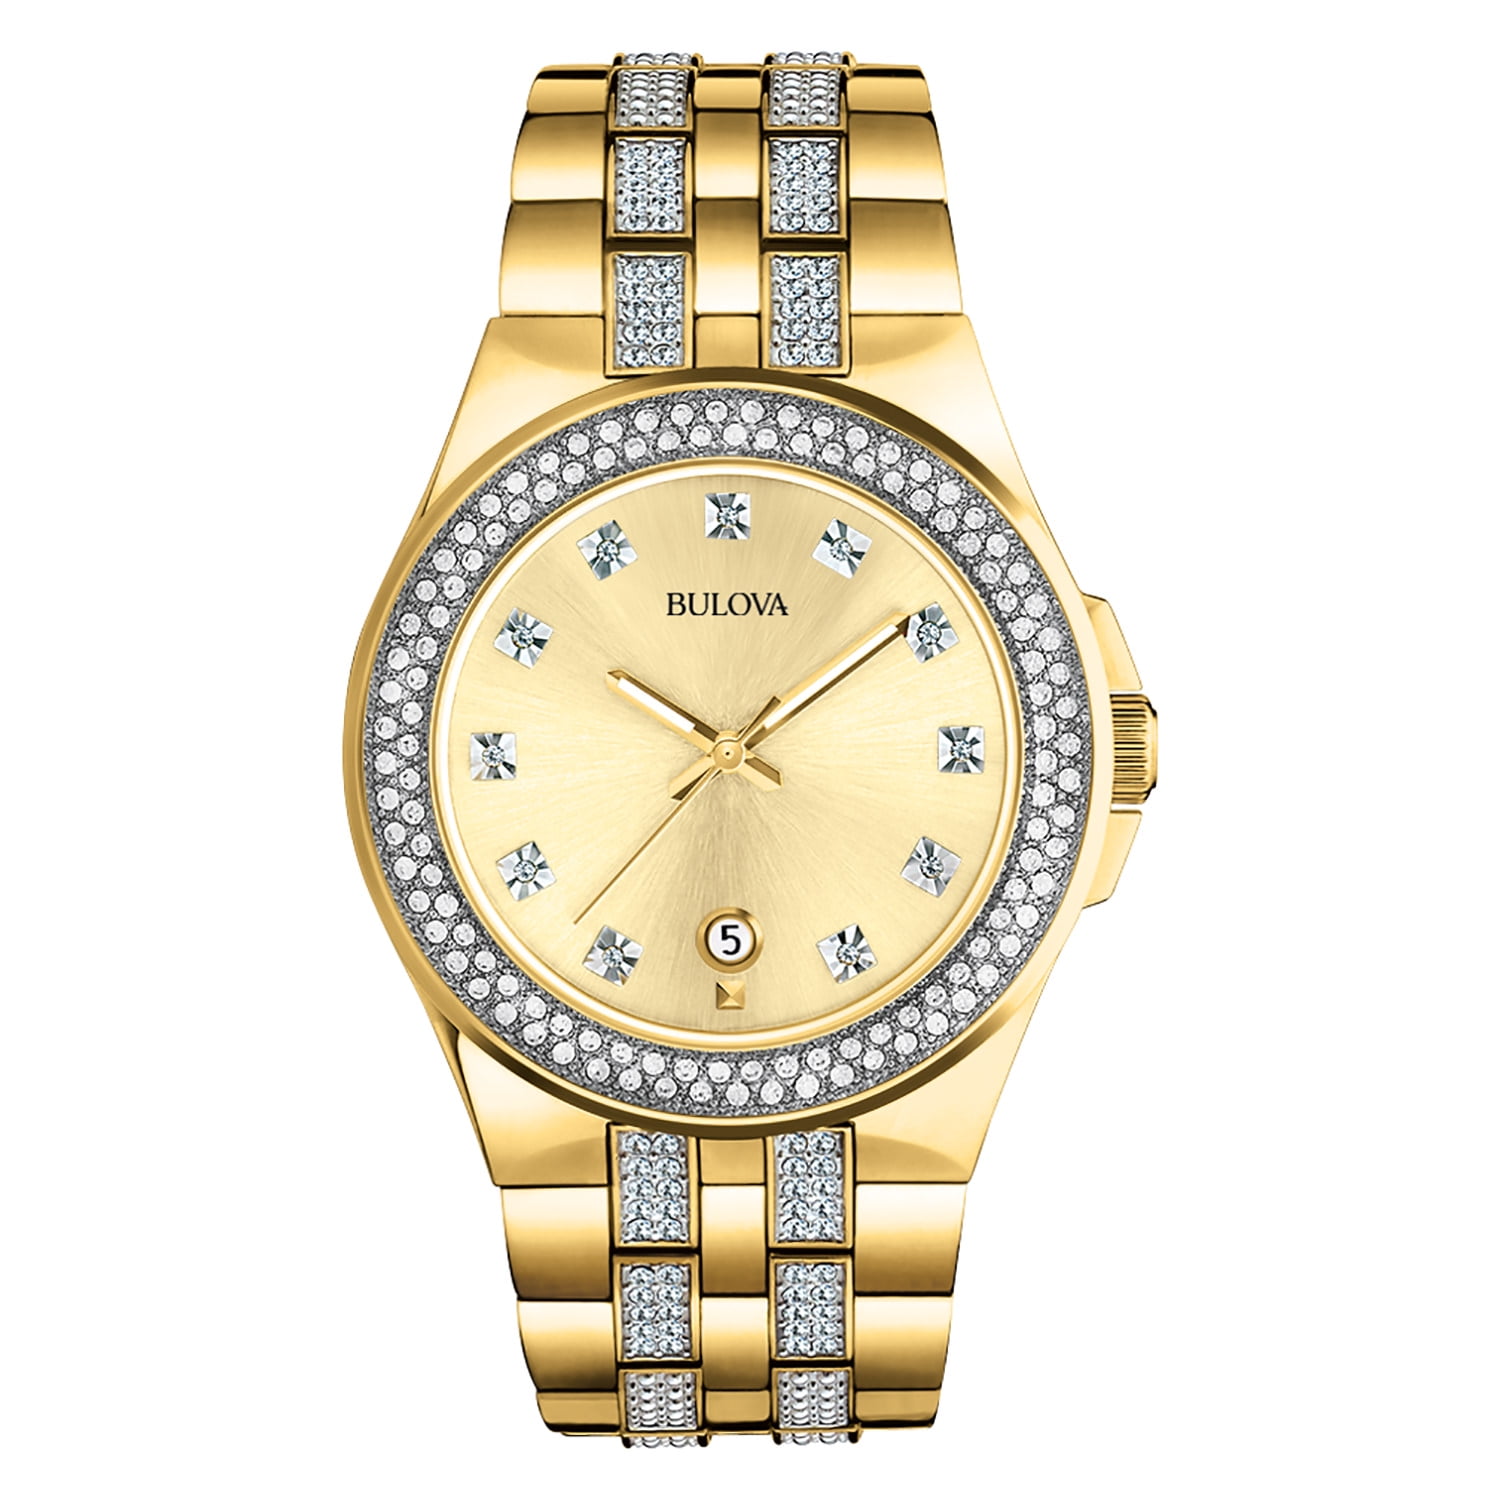 Bulova Men's Swarovski Crystal Gold Stainless Steel Watch 98B174